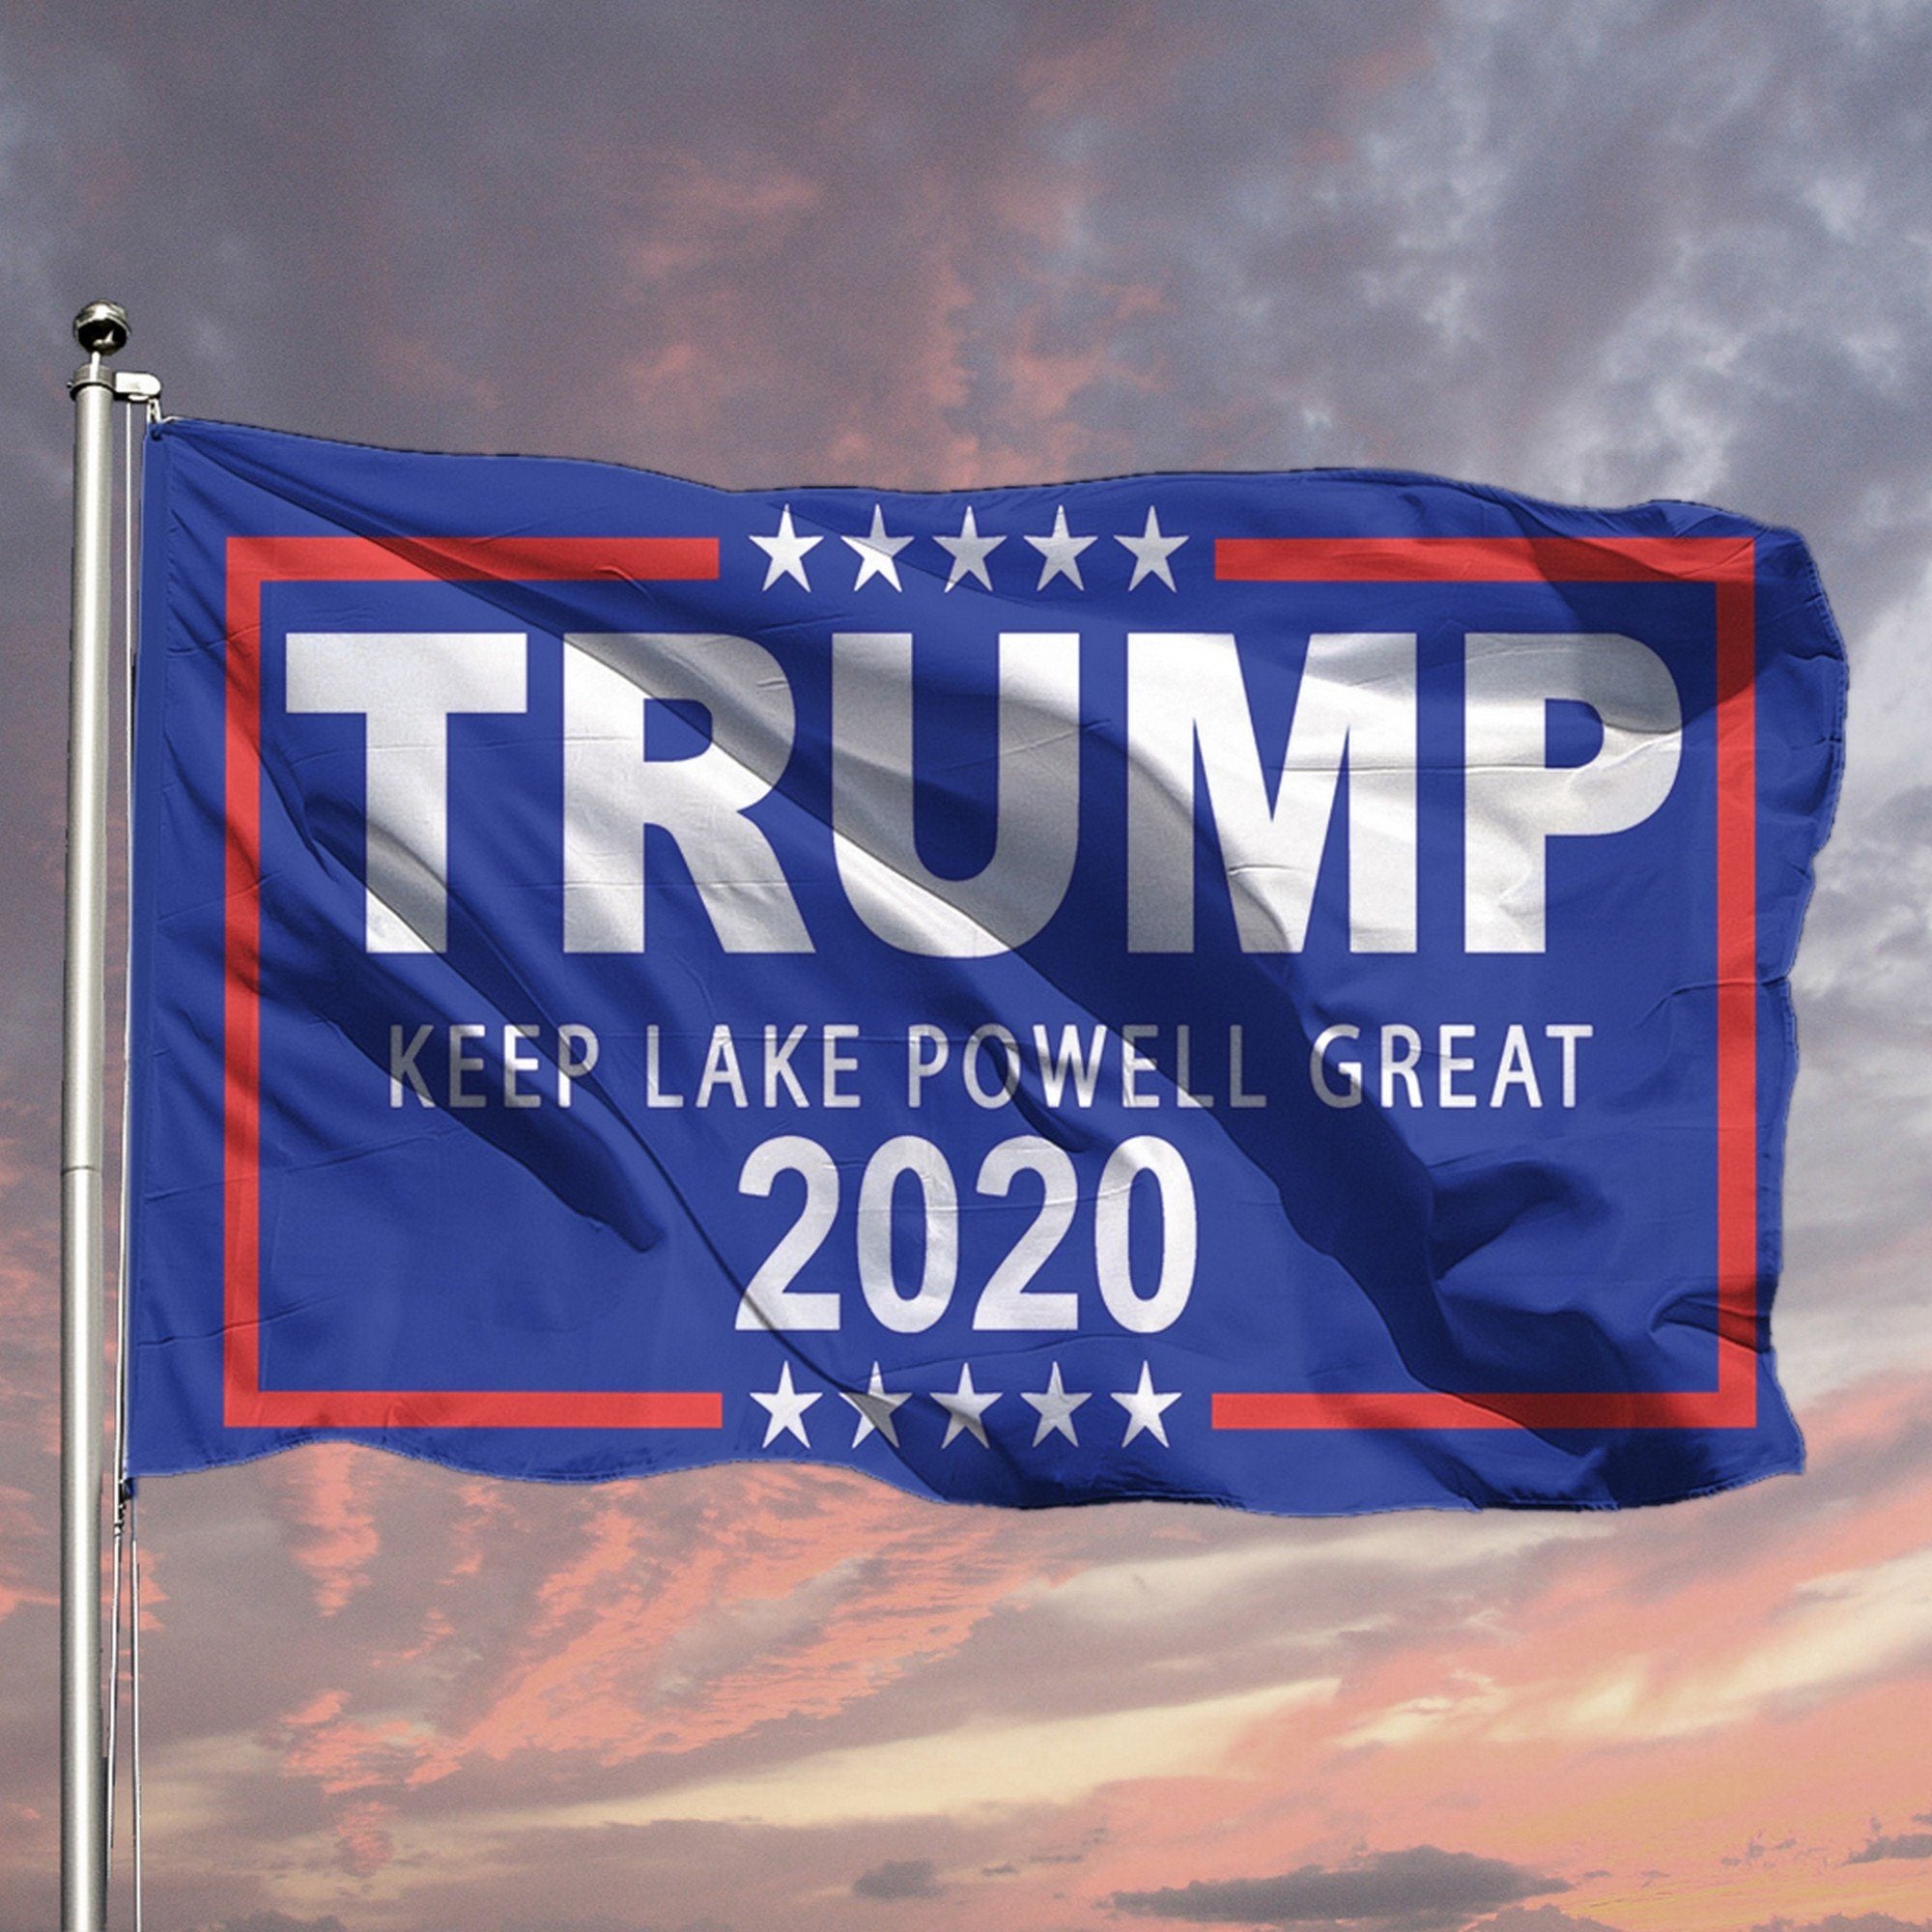 Trump Boat Flags - Keep Lake Powell Great - Houseboat Kings